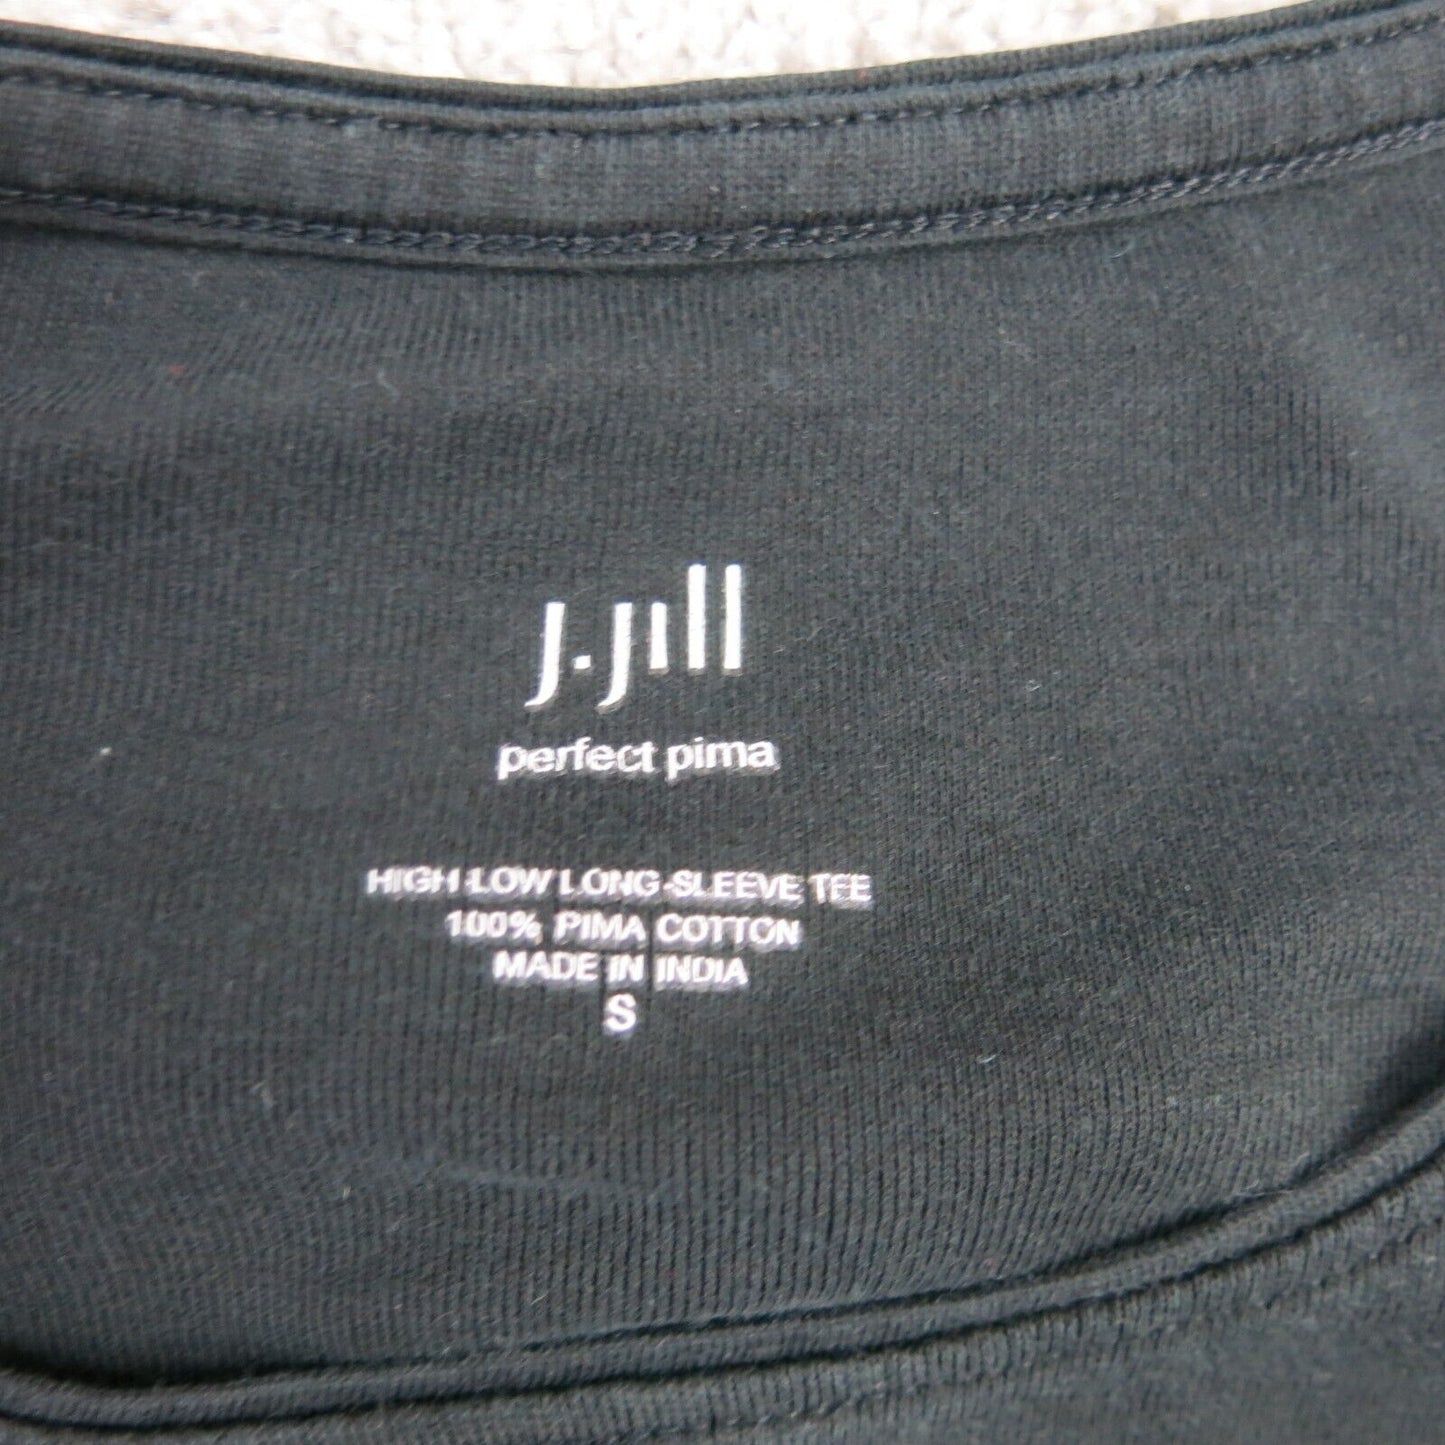 J. Jill Pima Crew Neck High Low Tee Size Medium Black Long Sleeve